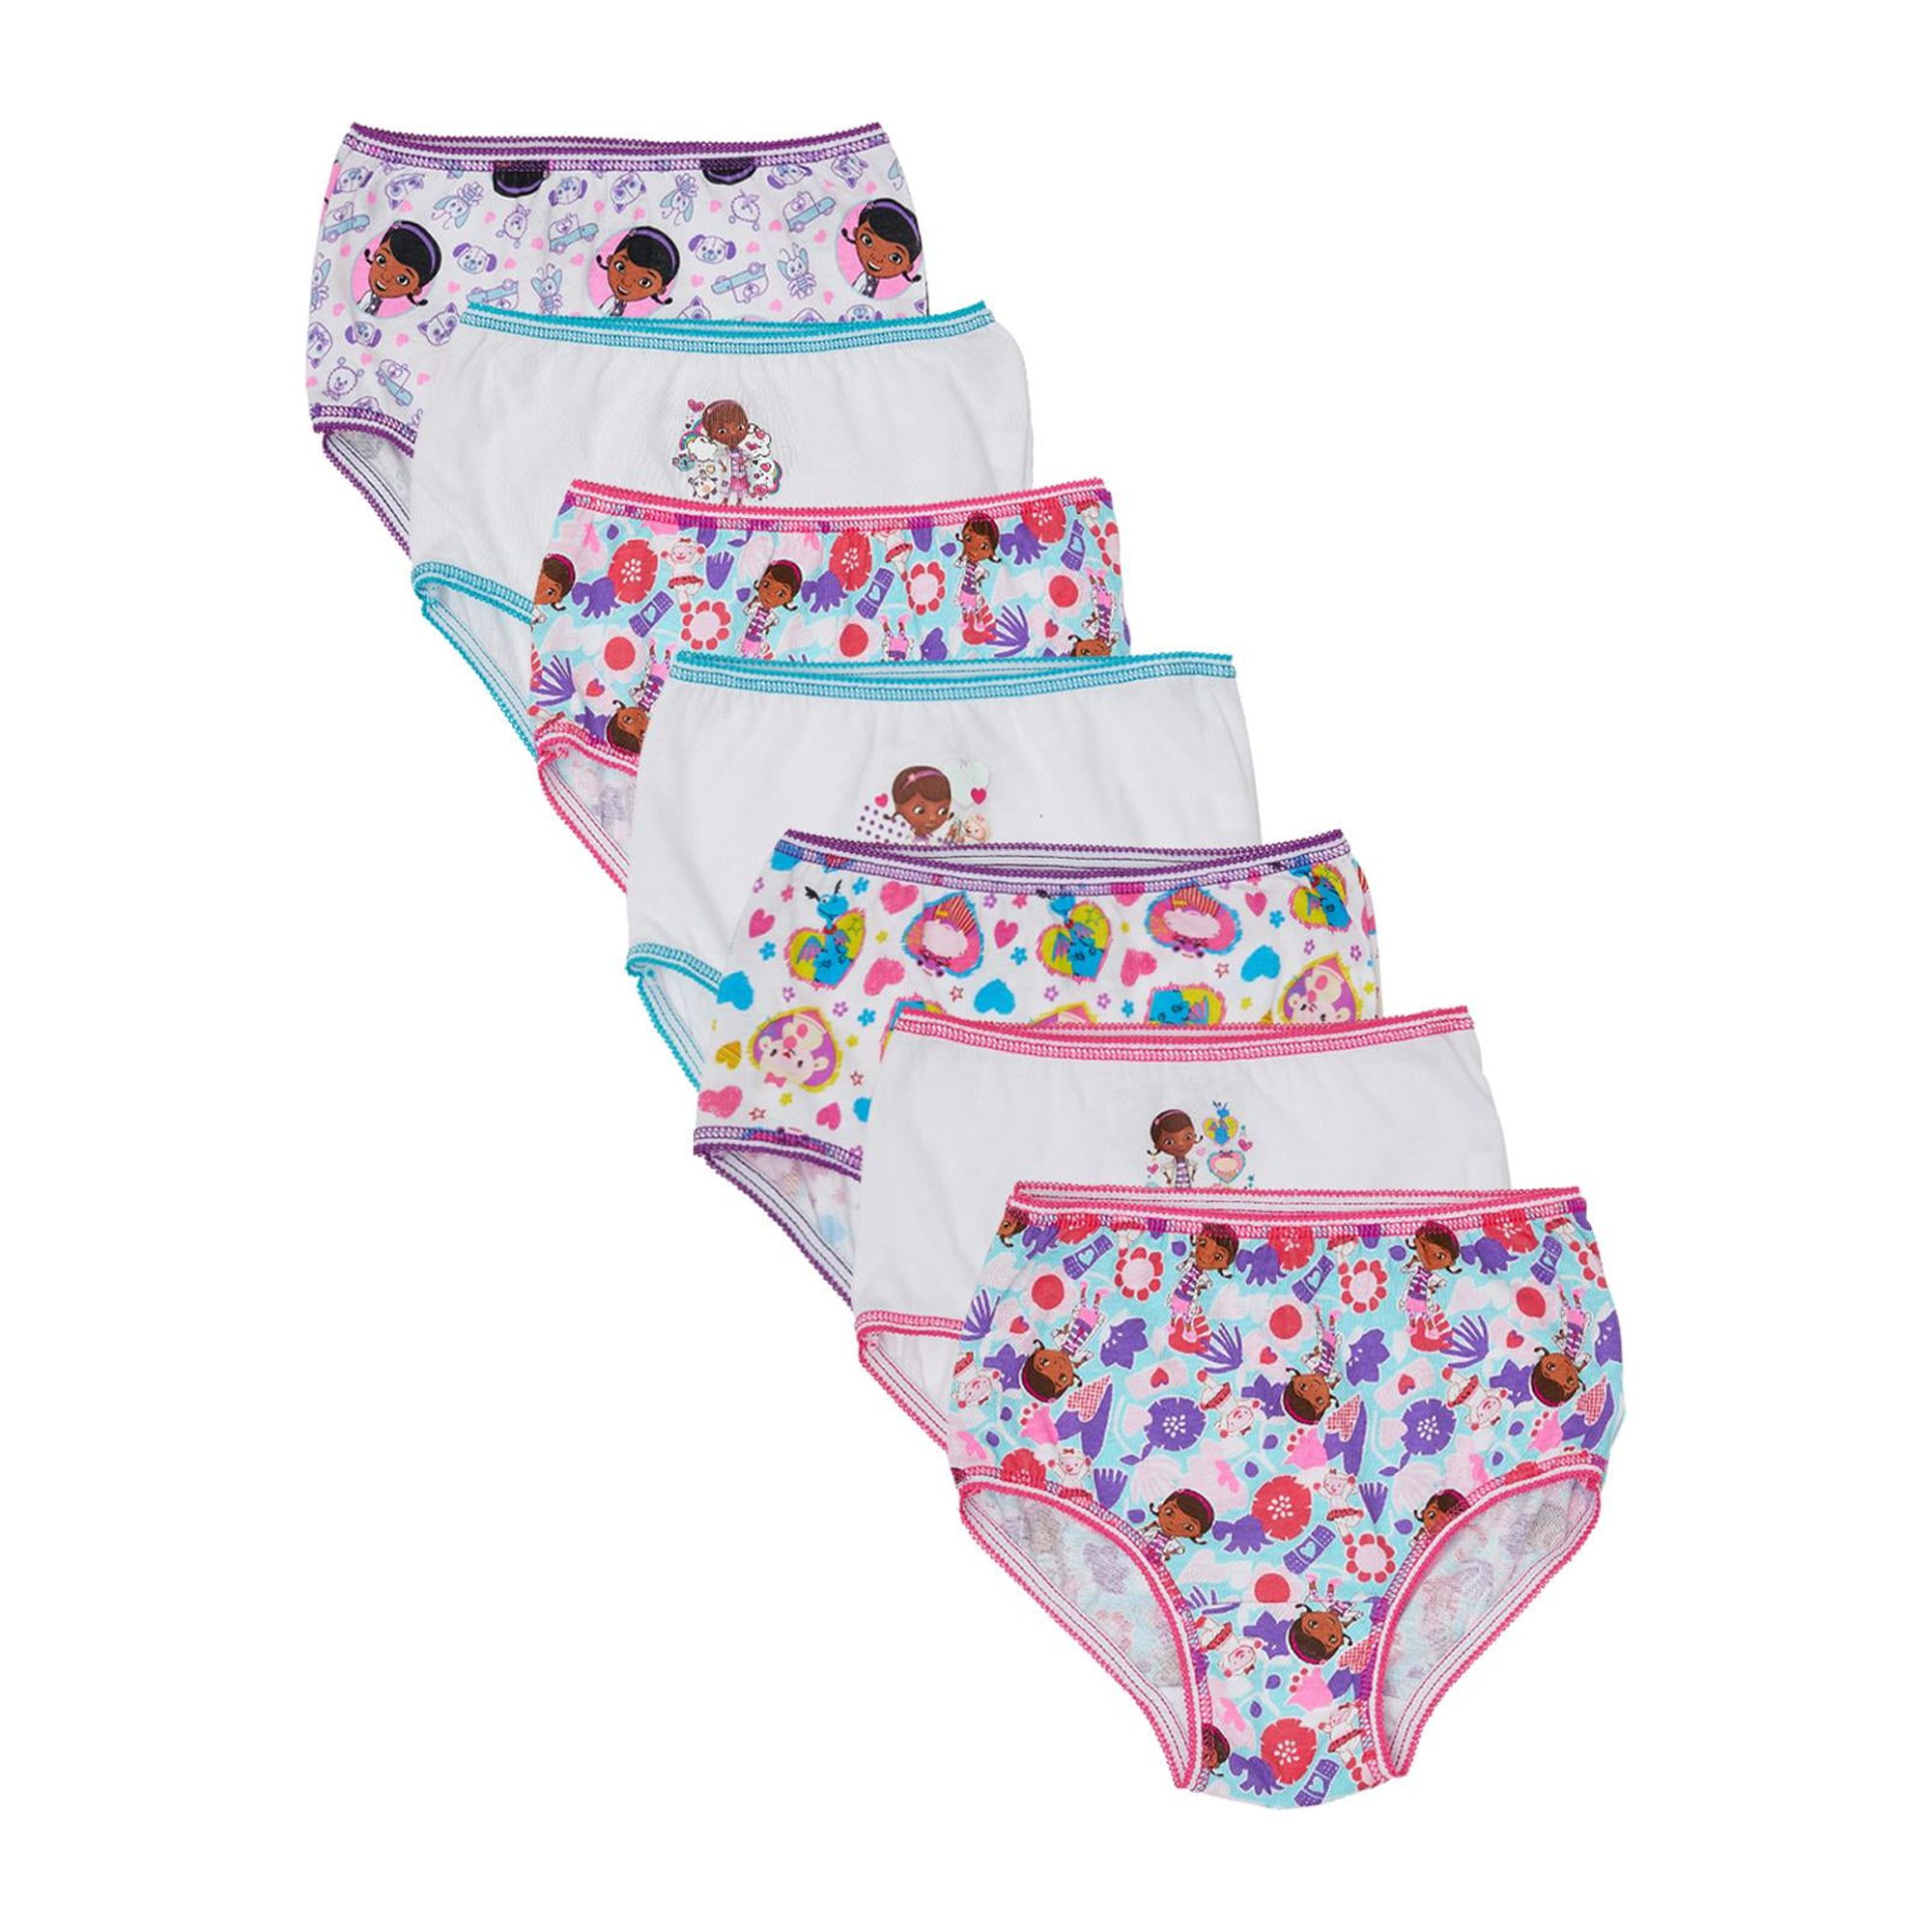 Disney Junior Toddler Girls Doc McStuffins Underwear, 7-Pack 100% Cotton Panties - image 1 of 2